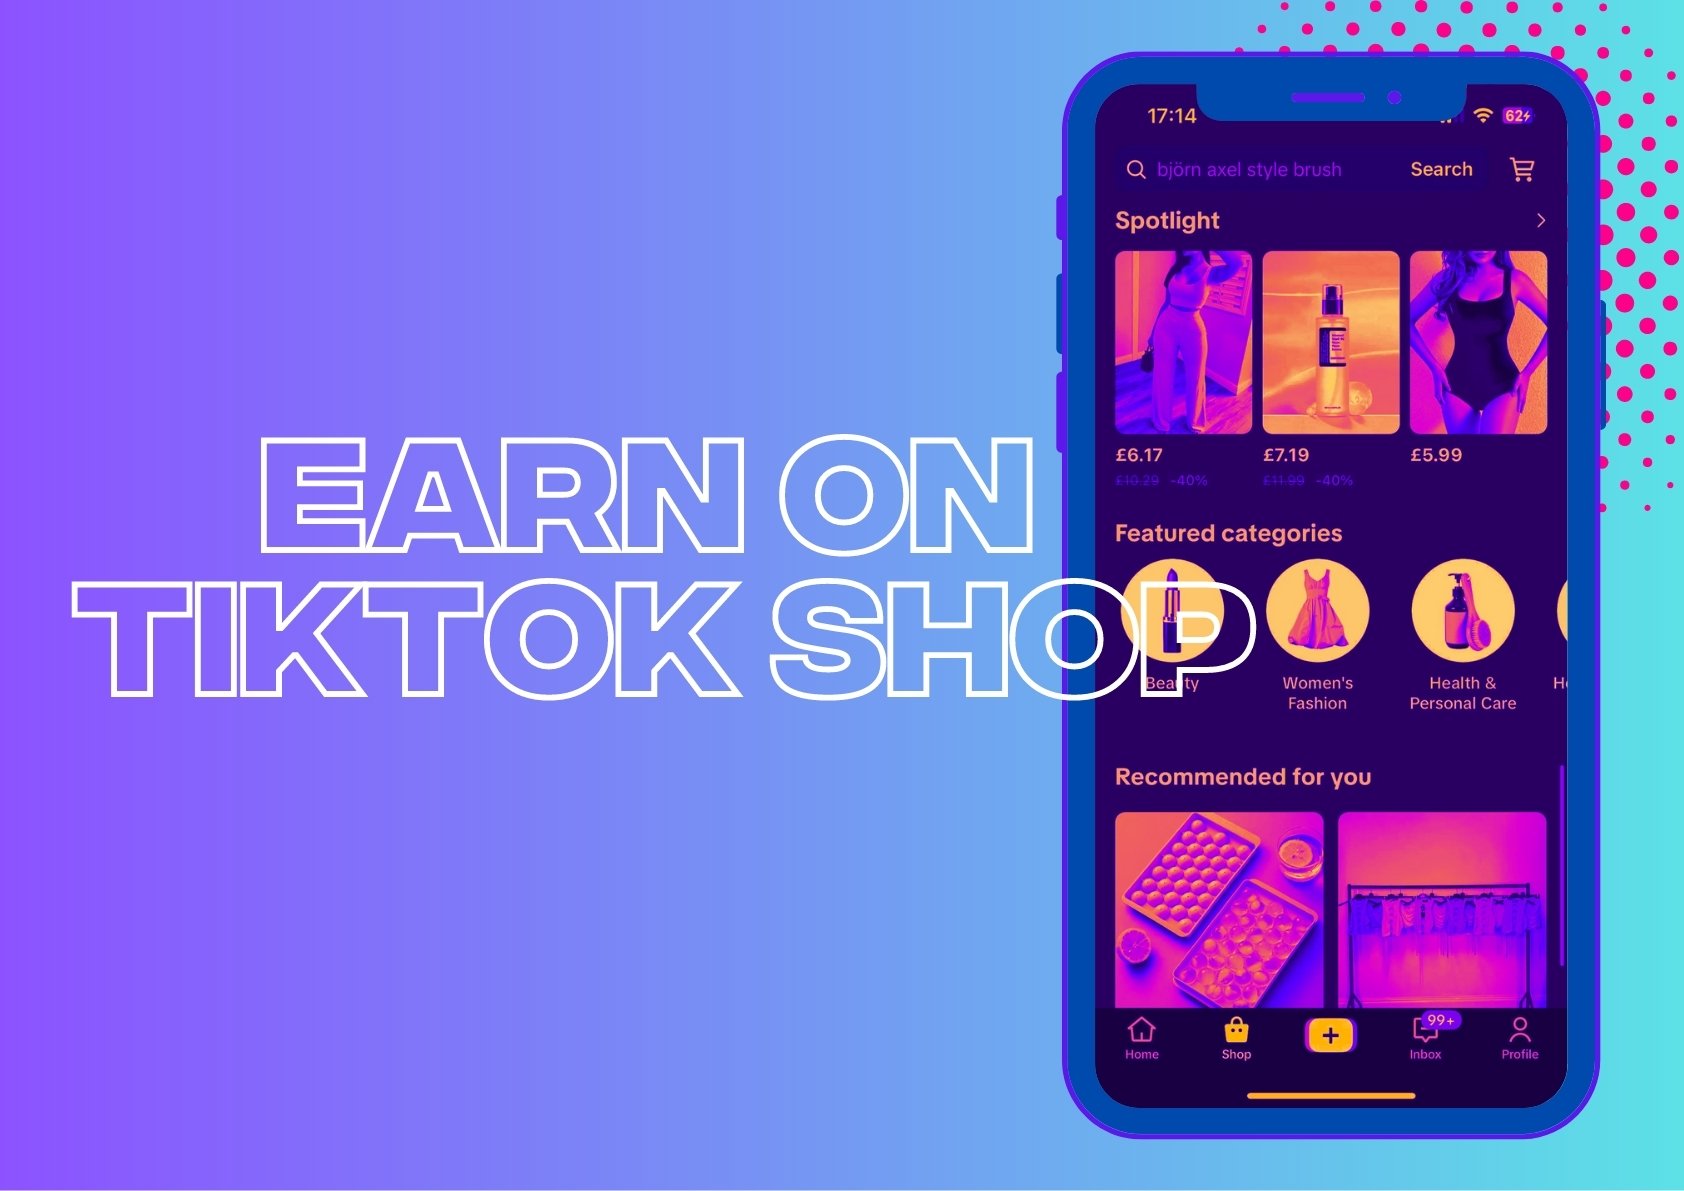 How to Earn on TikTok Shop as a Creator